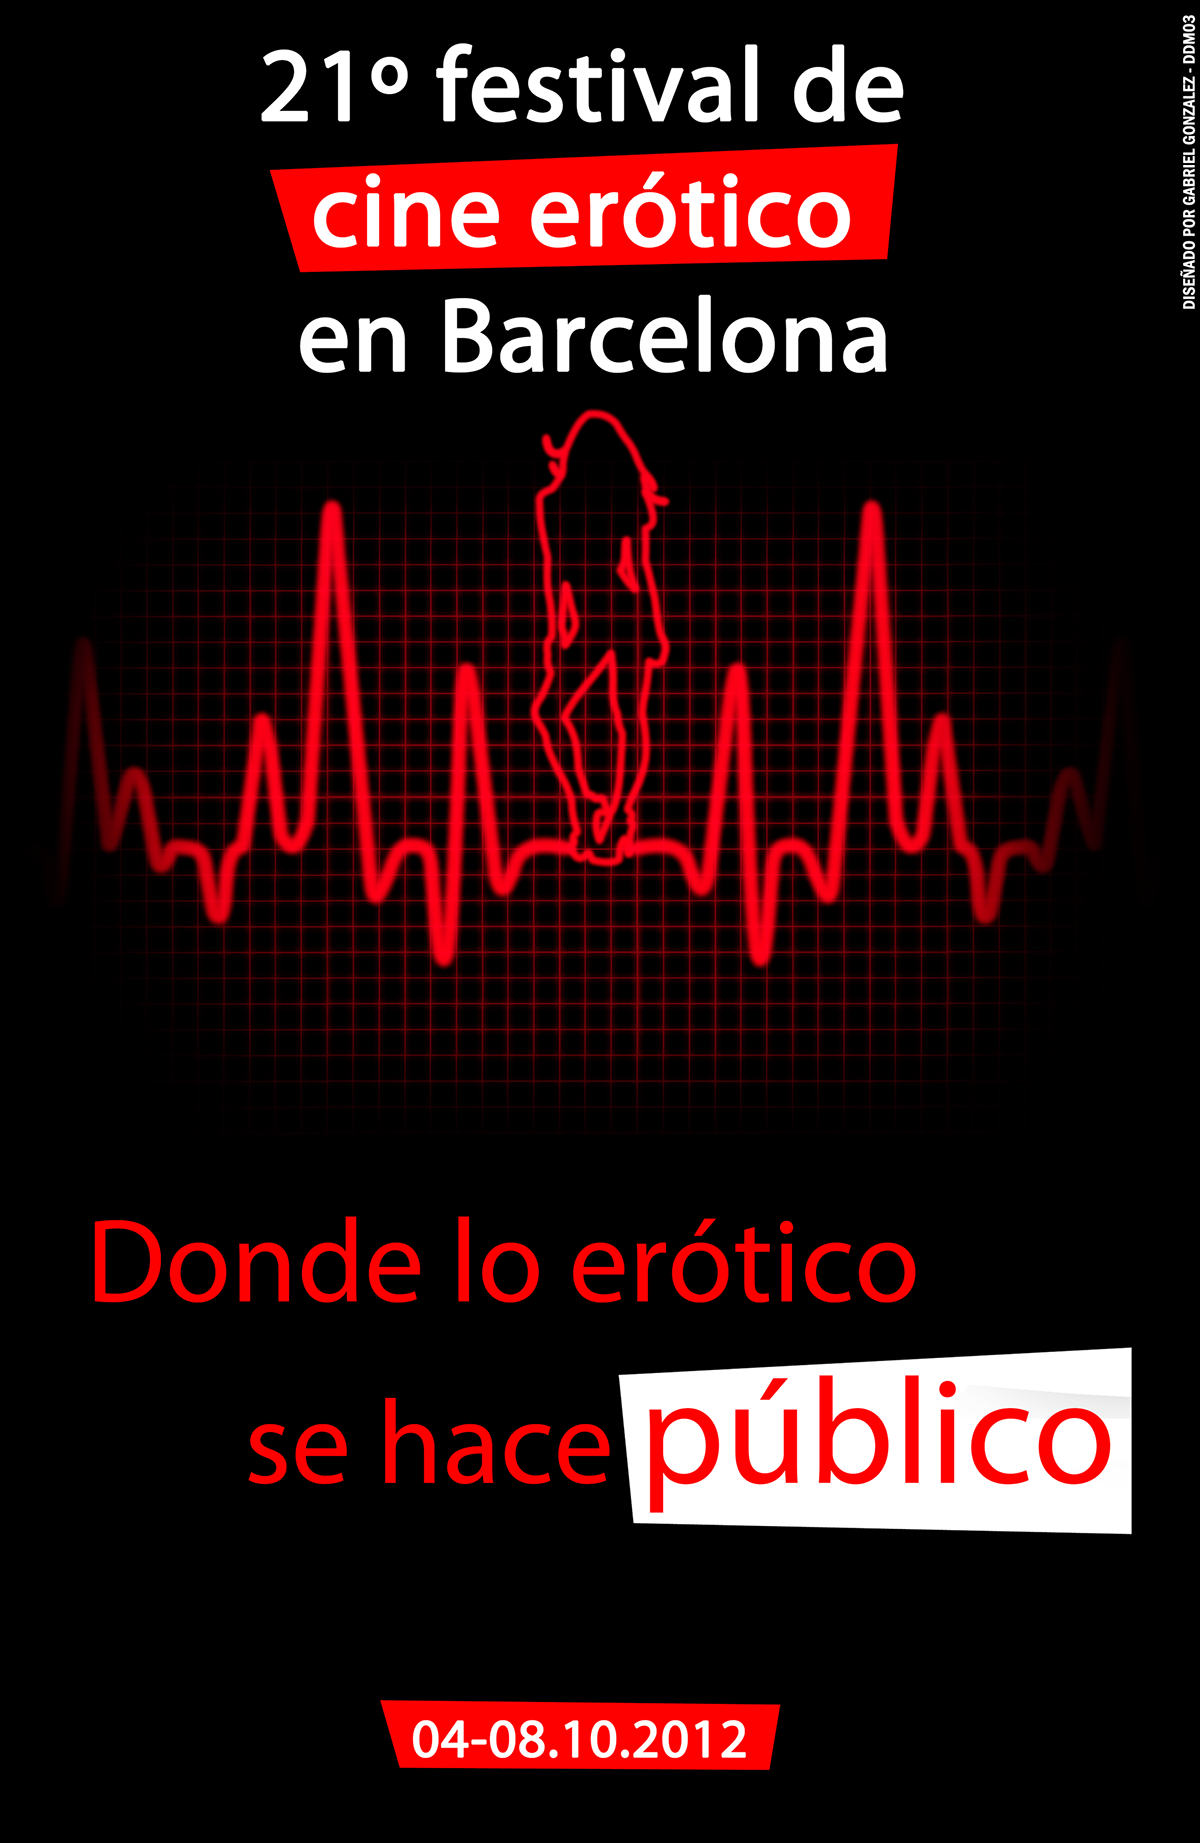 festival erotico barcelona poster minimal desing porn erotic arkangabo Incap